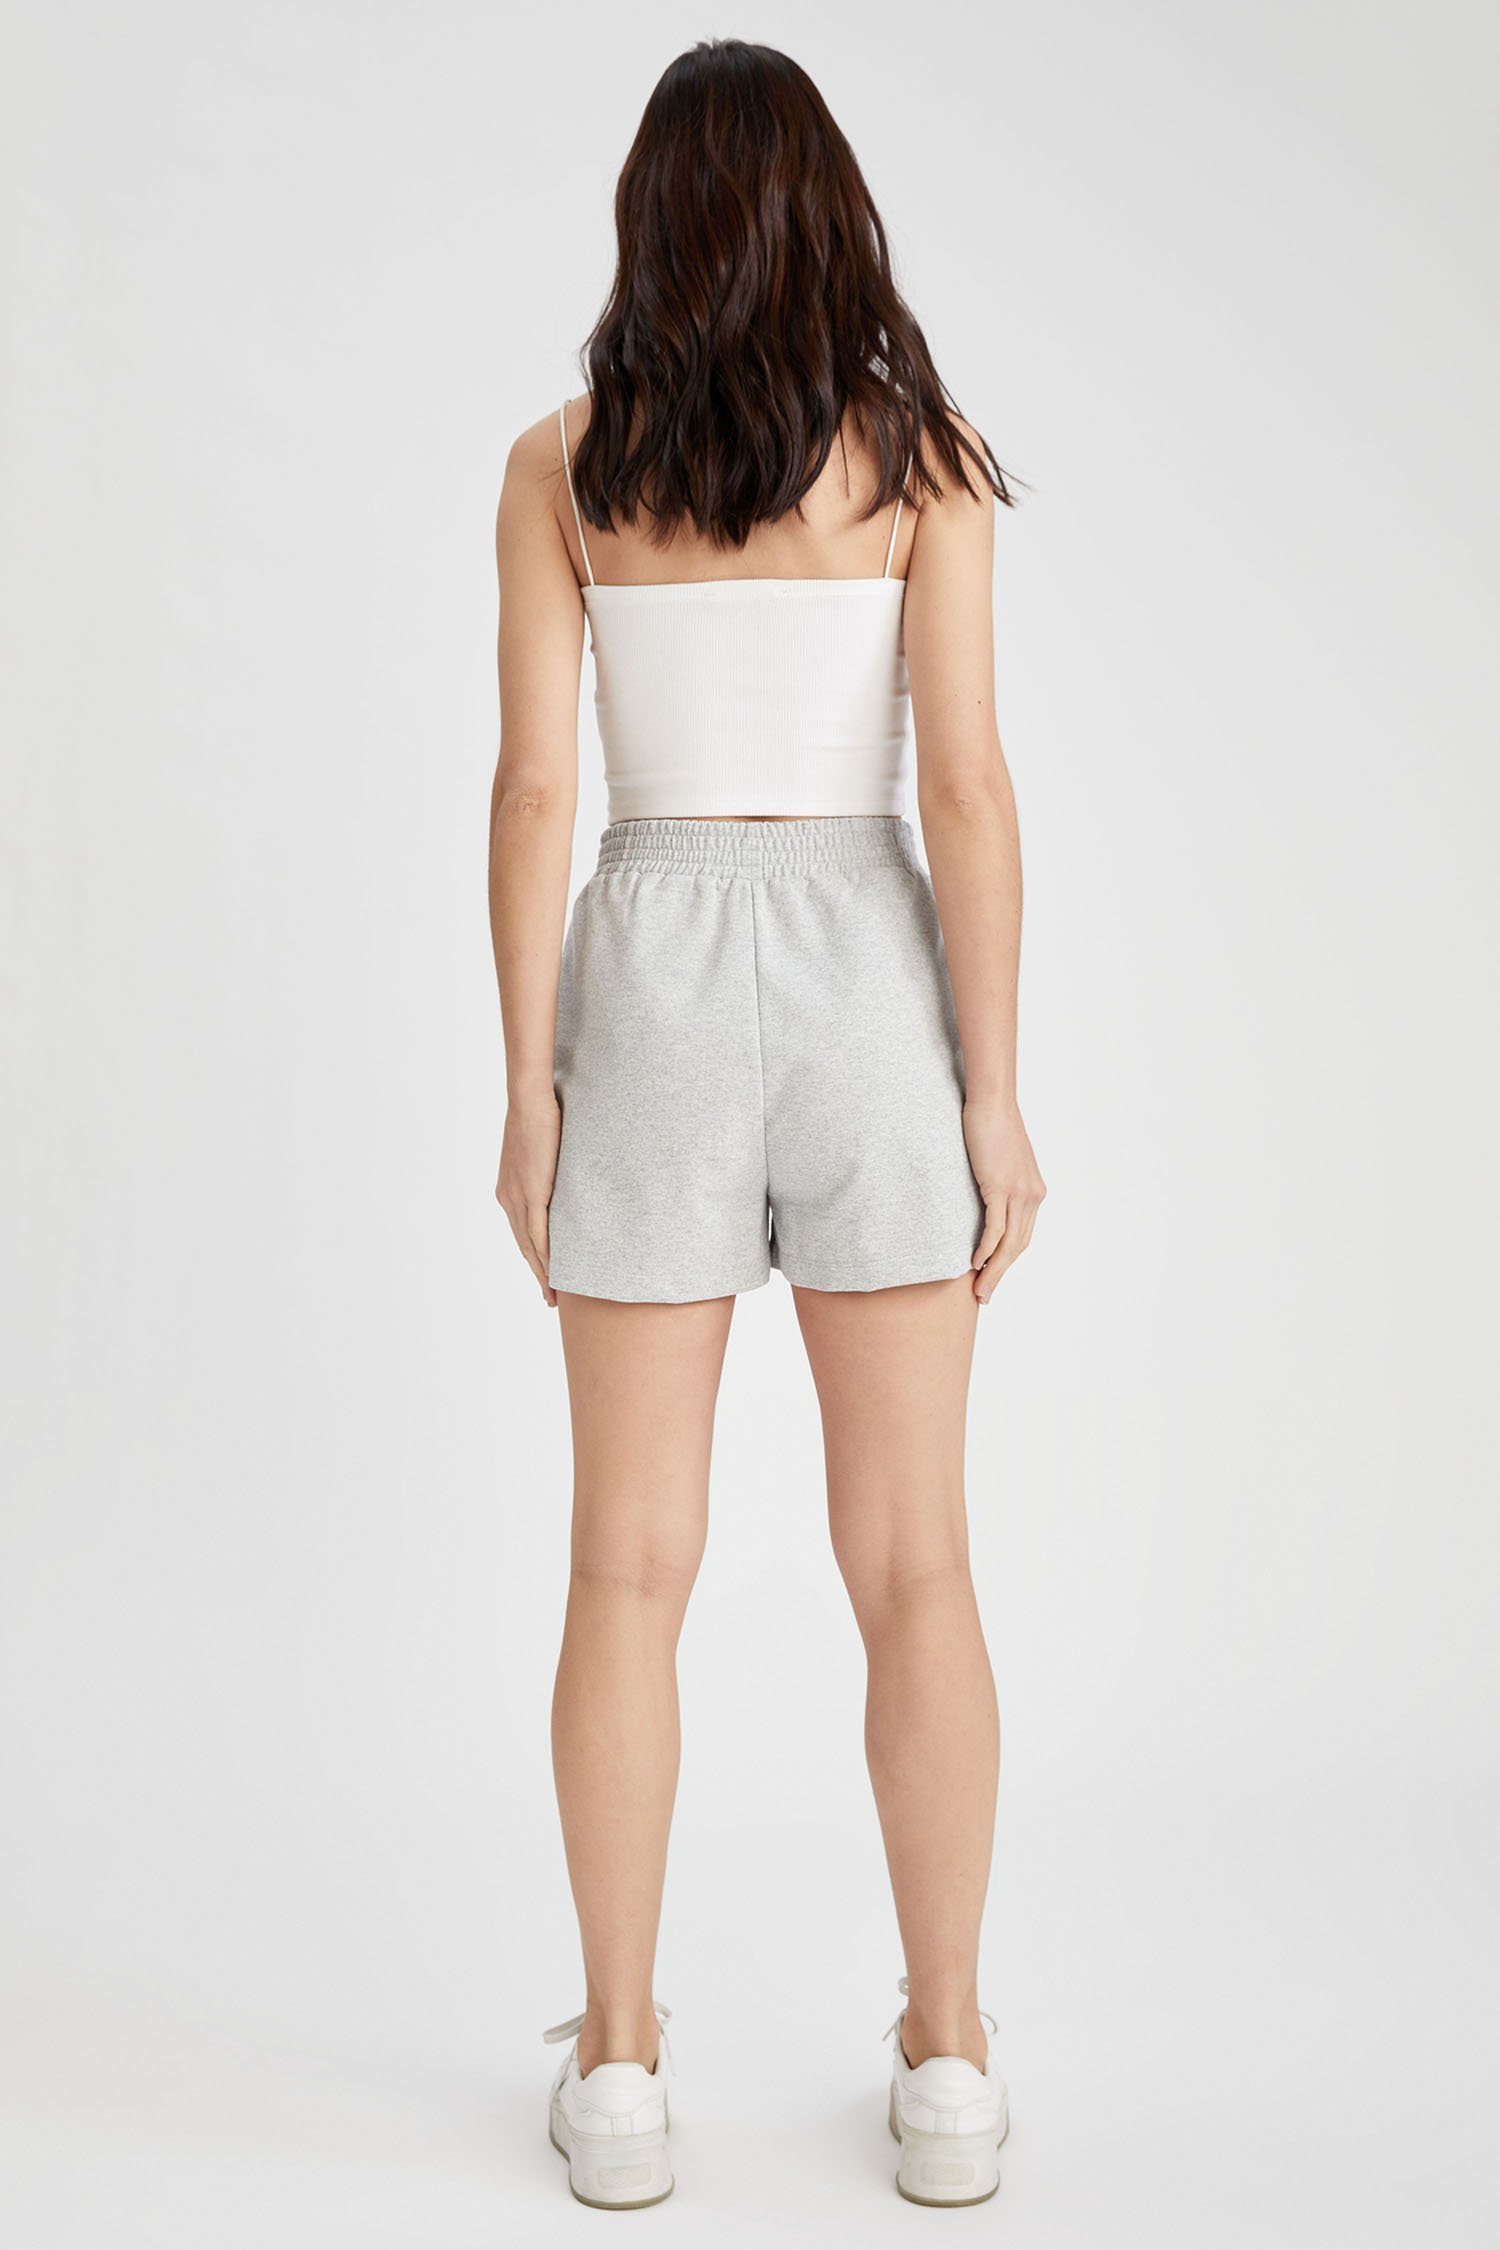 Damen Melange Shorts Grau FIT DeFacto REGULAR Shorts